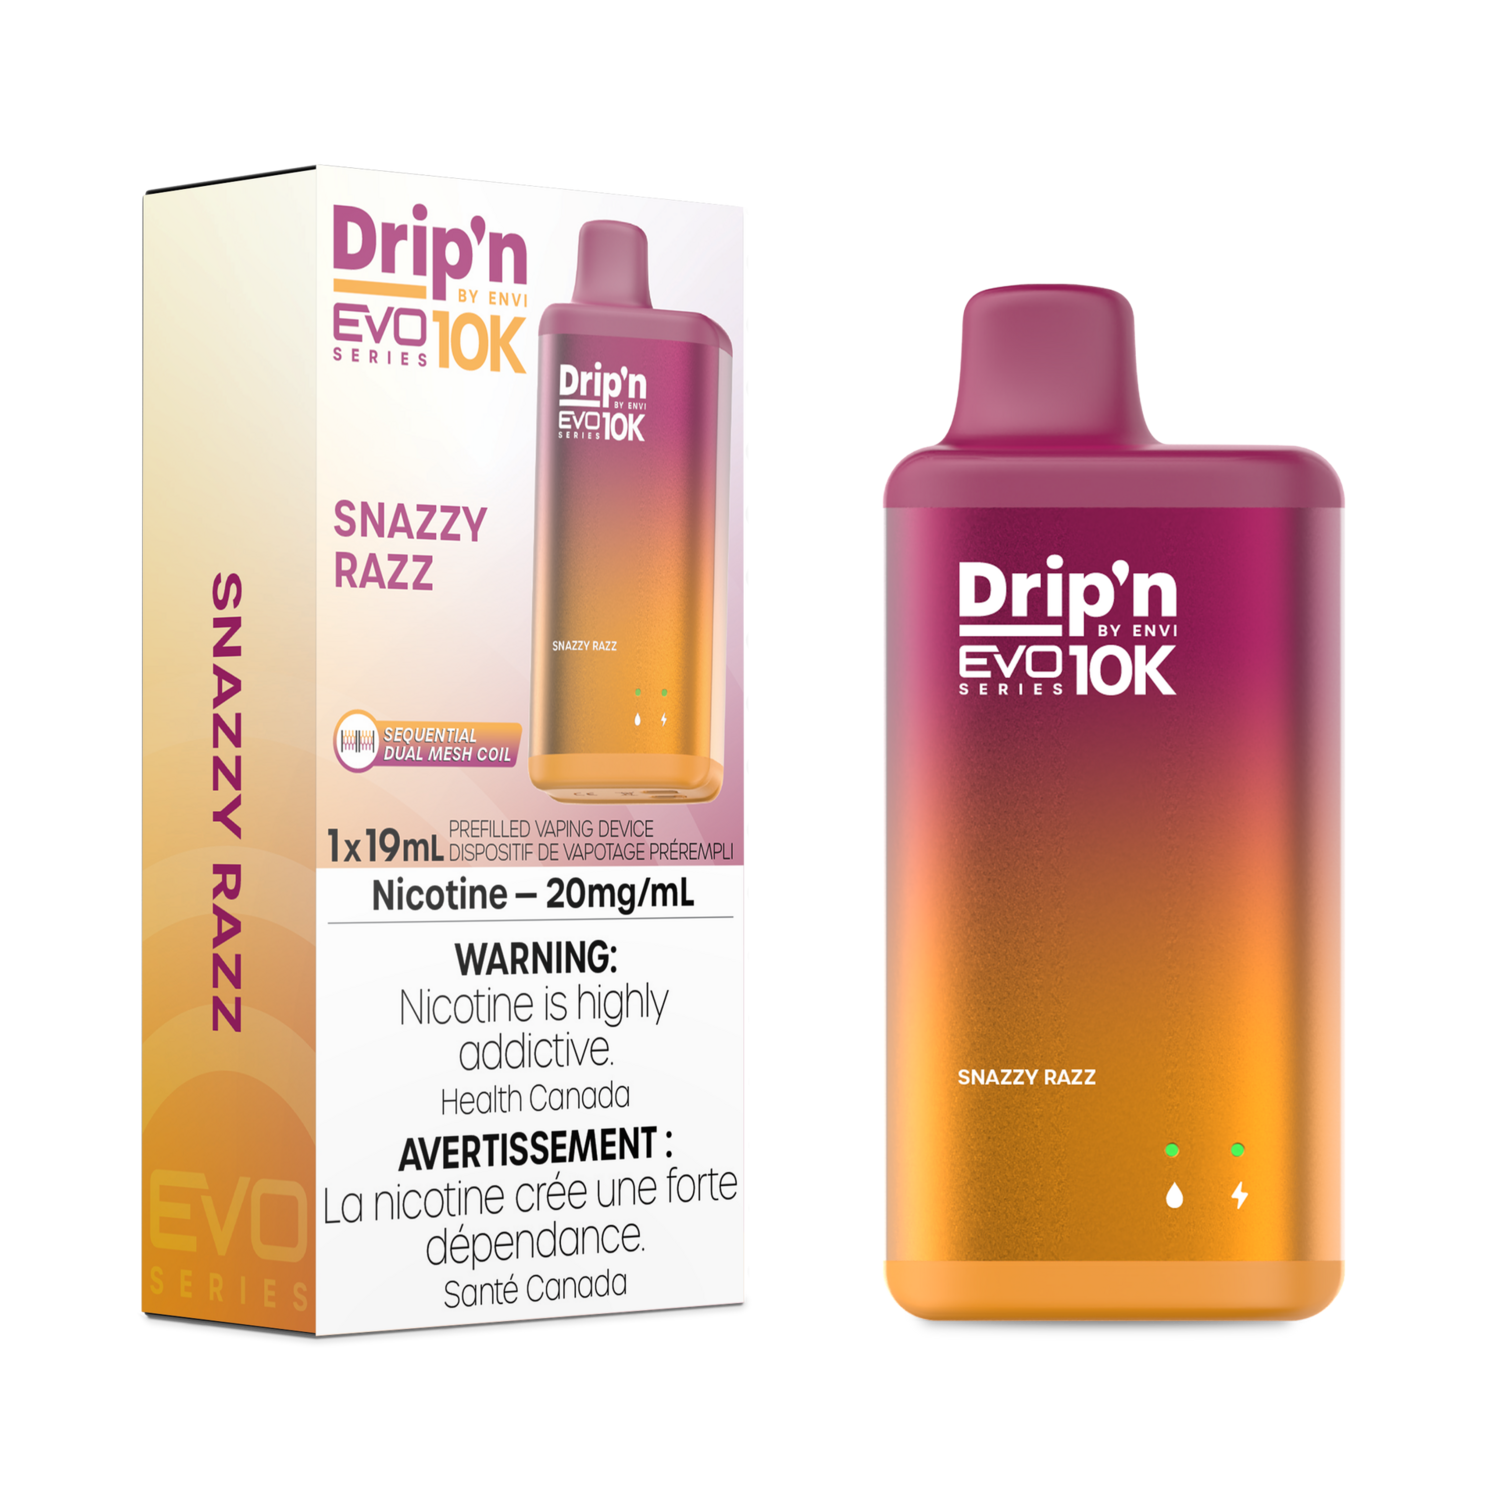 Snazzy Razz - Drip'n by Envi Evo Series 10K Disposable